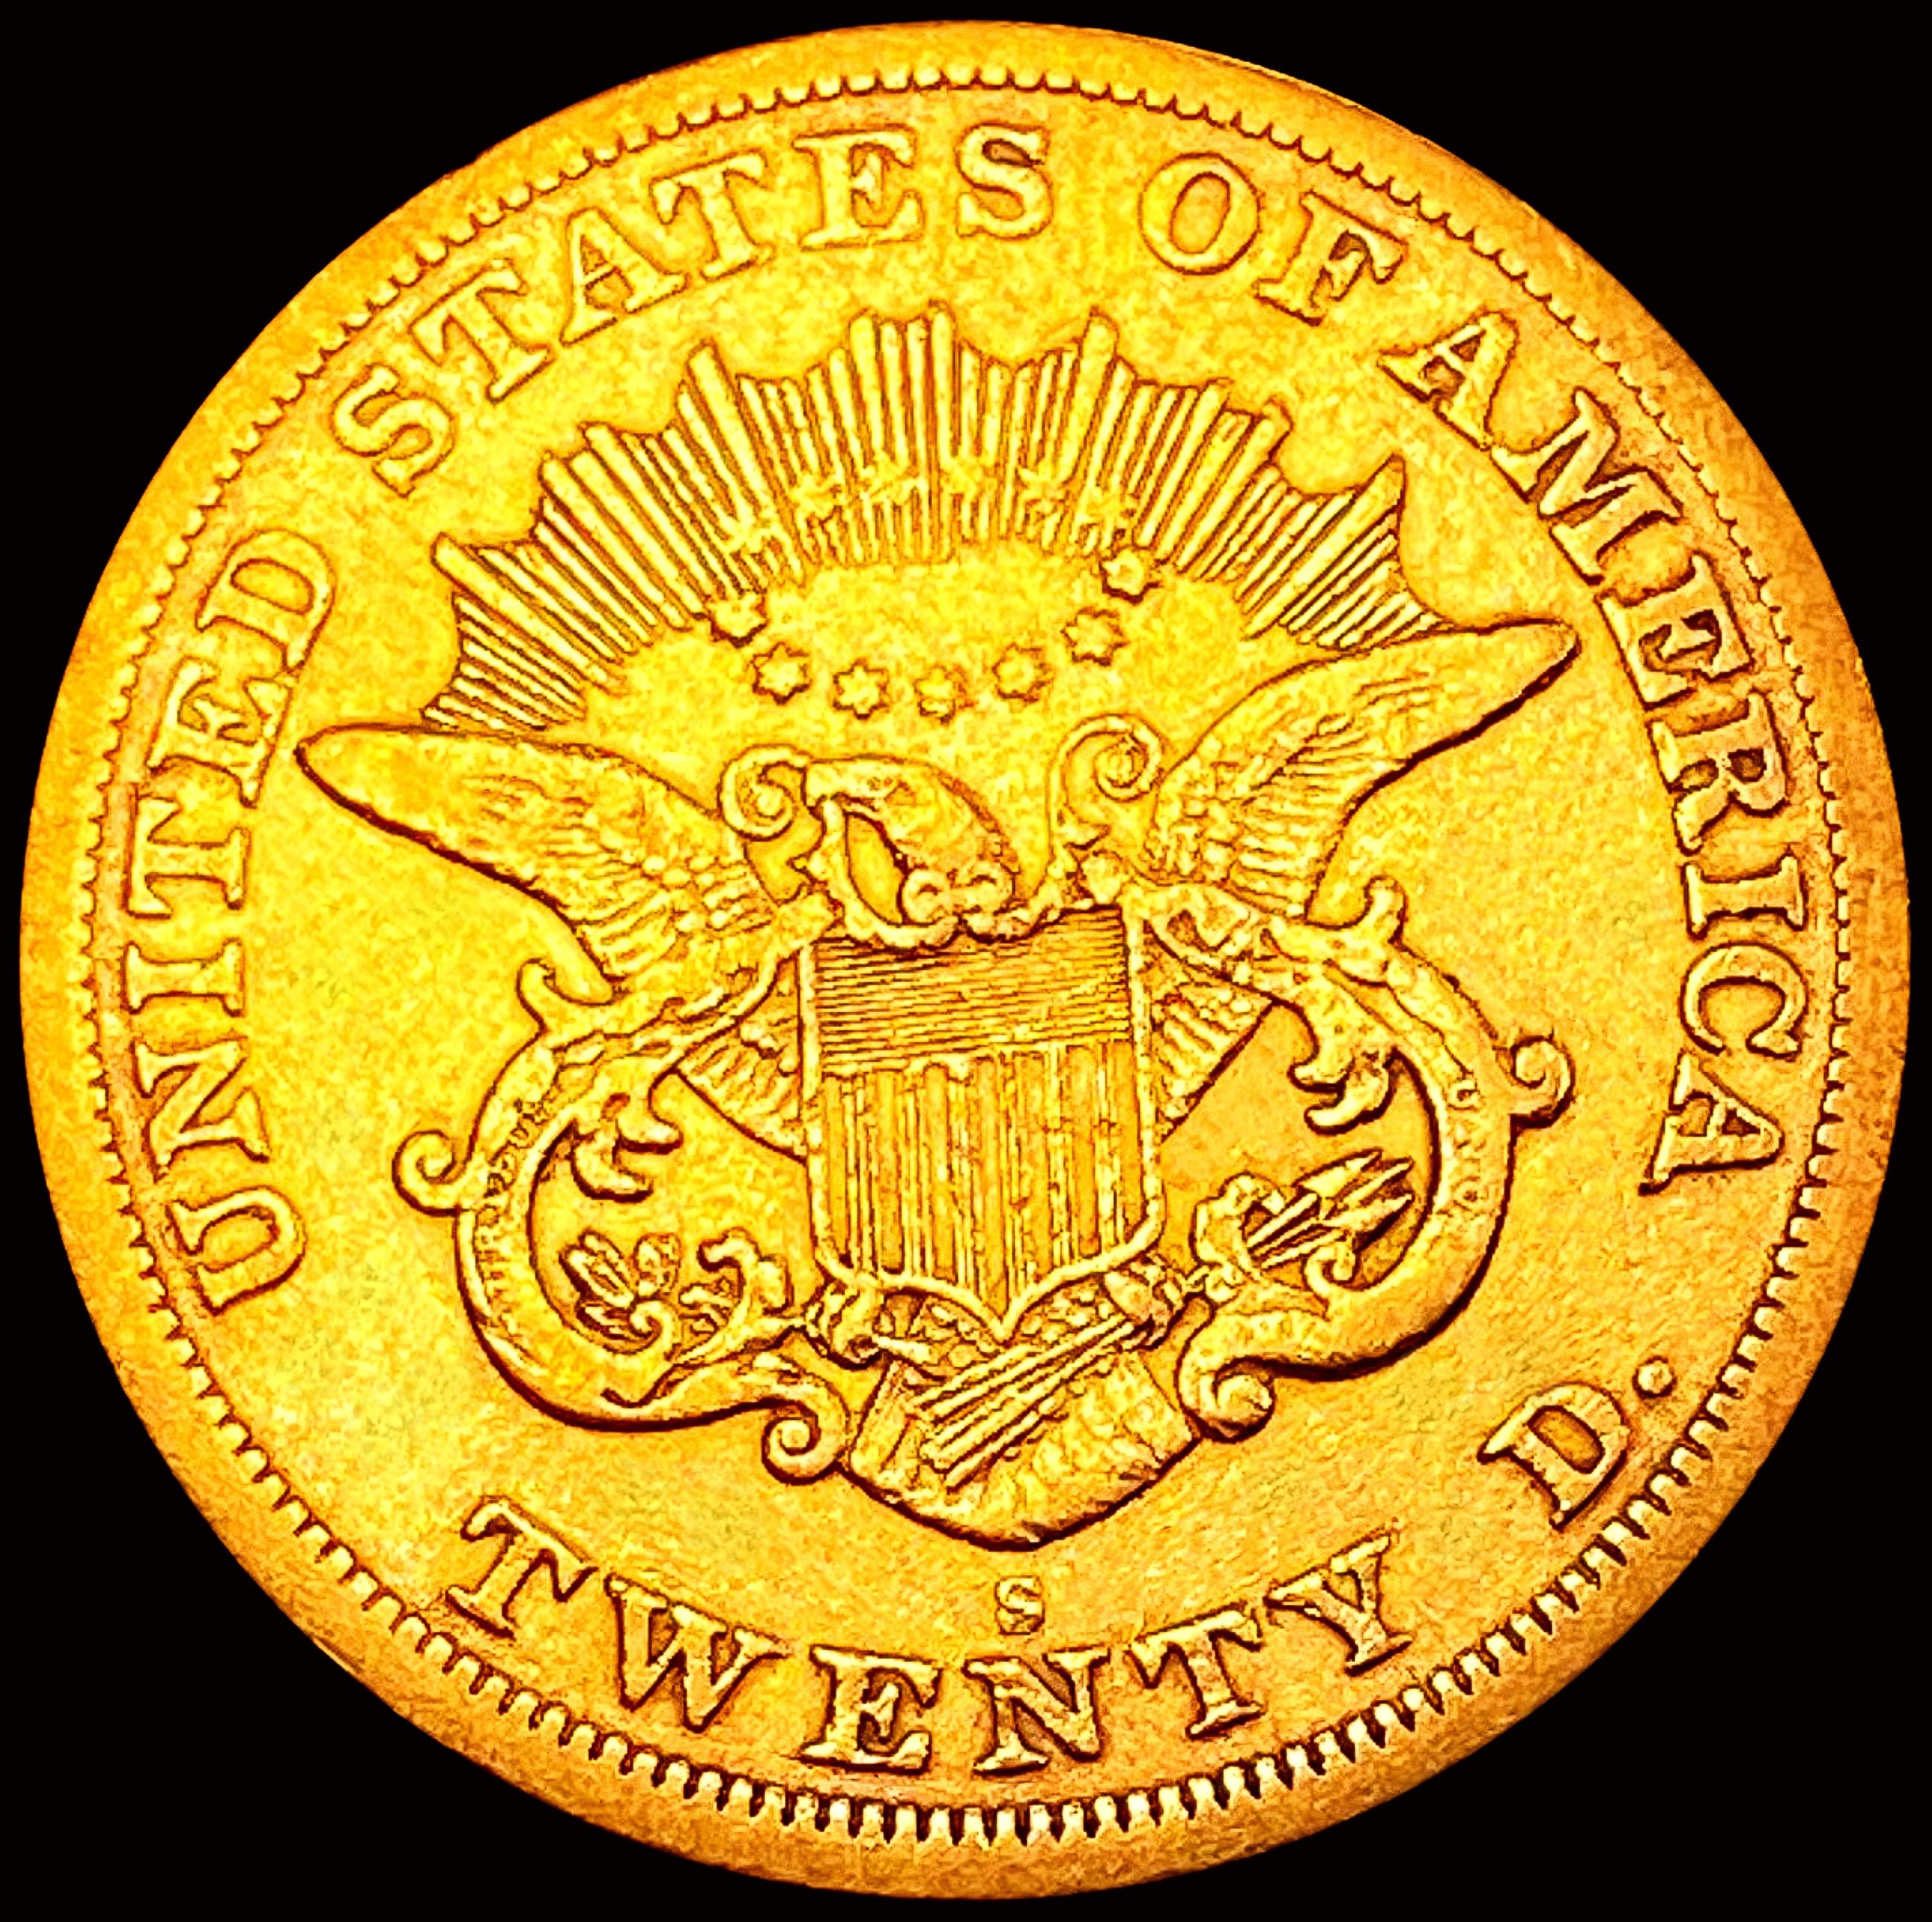 1865-S $20 Gold Double Eagle CHOICE AU